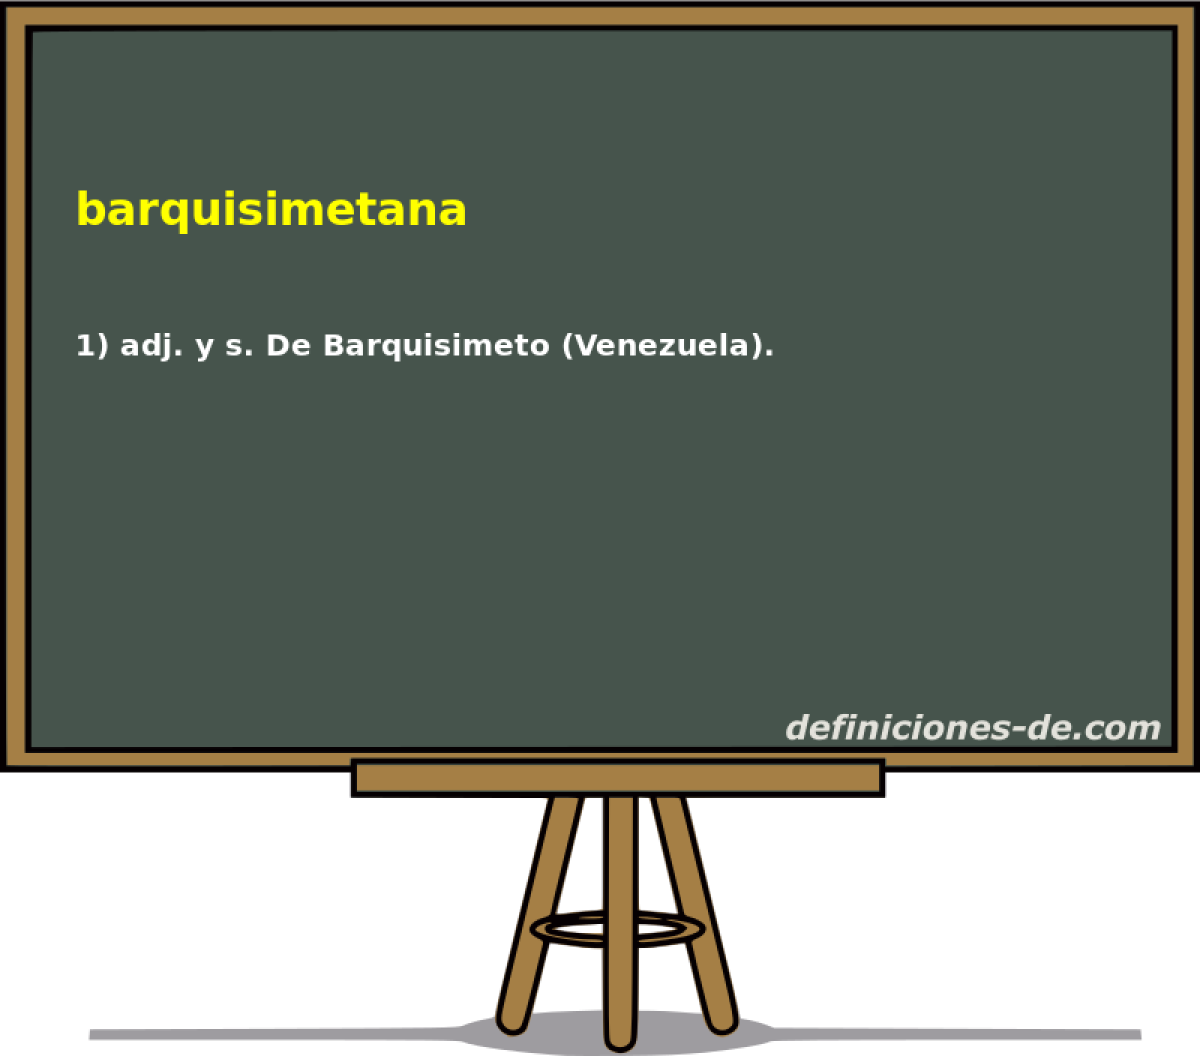 barquisimetana 